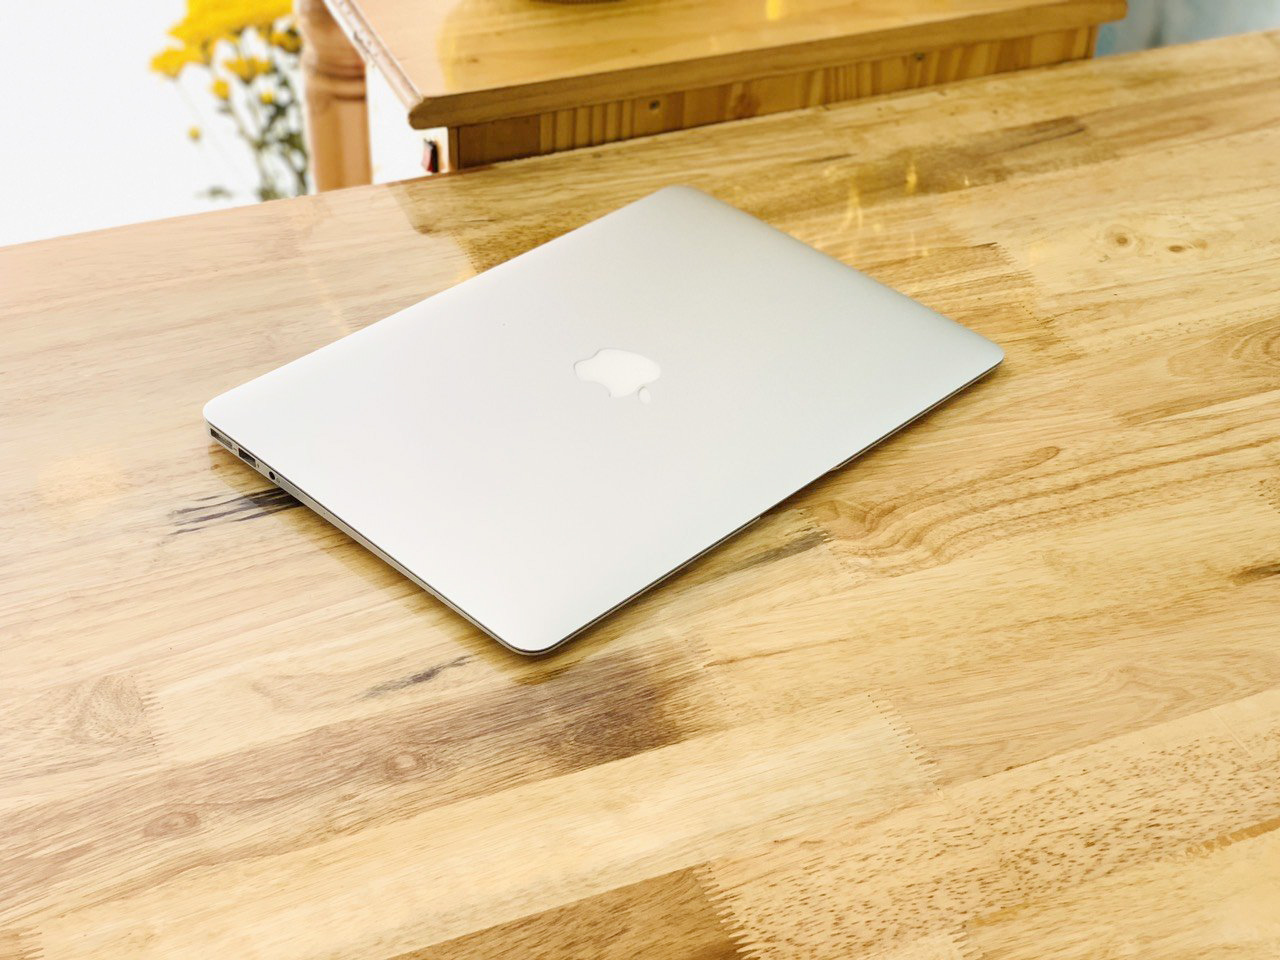 Macbook Air 13-inch Early 2014 i7